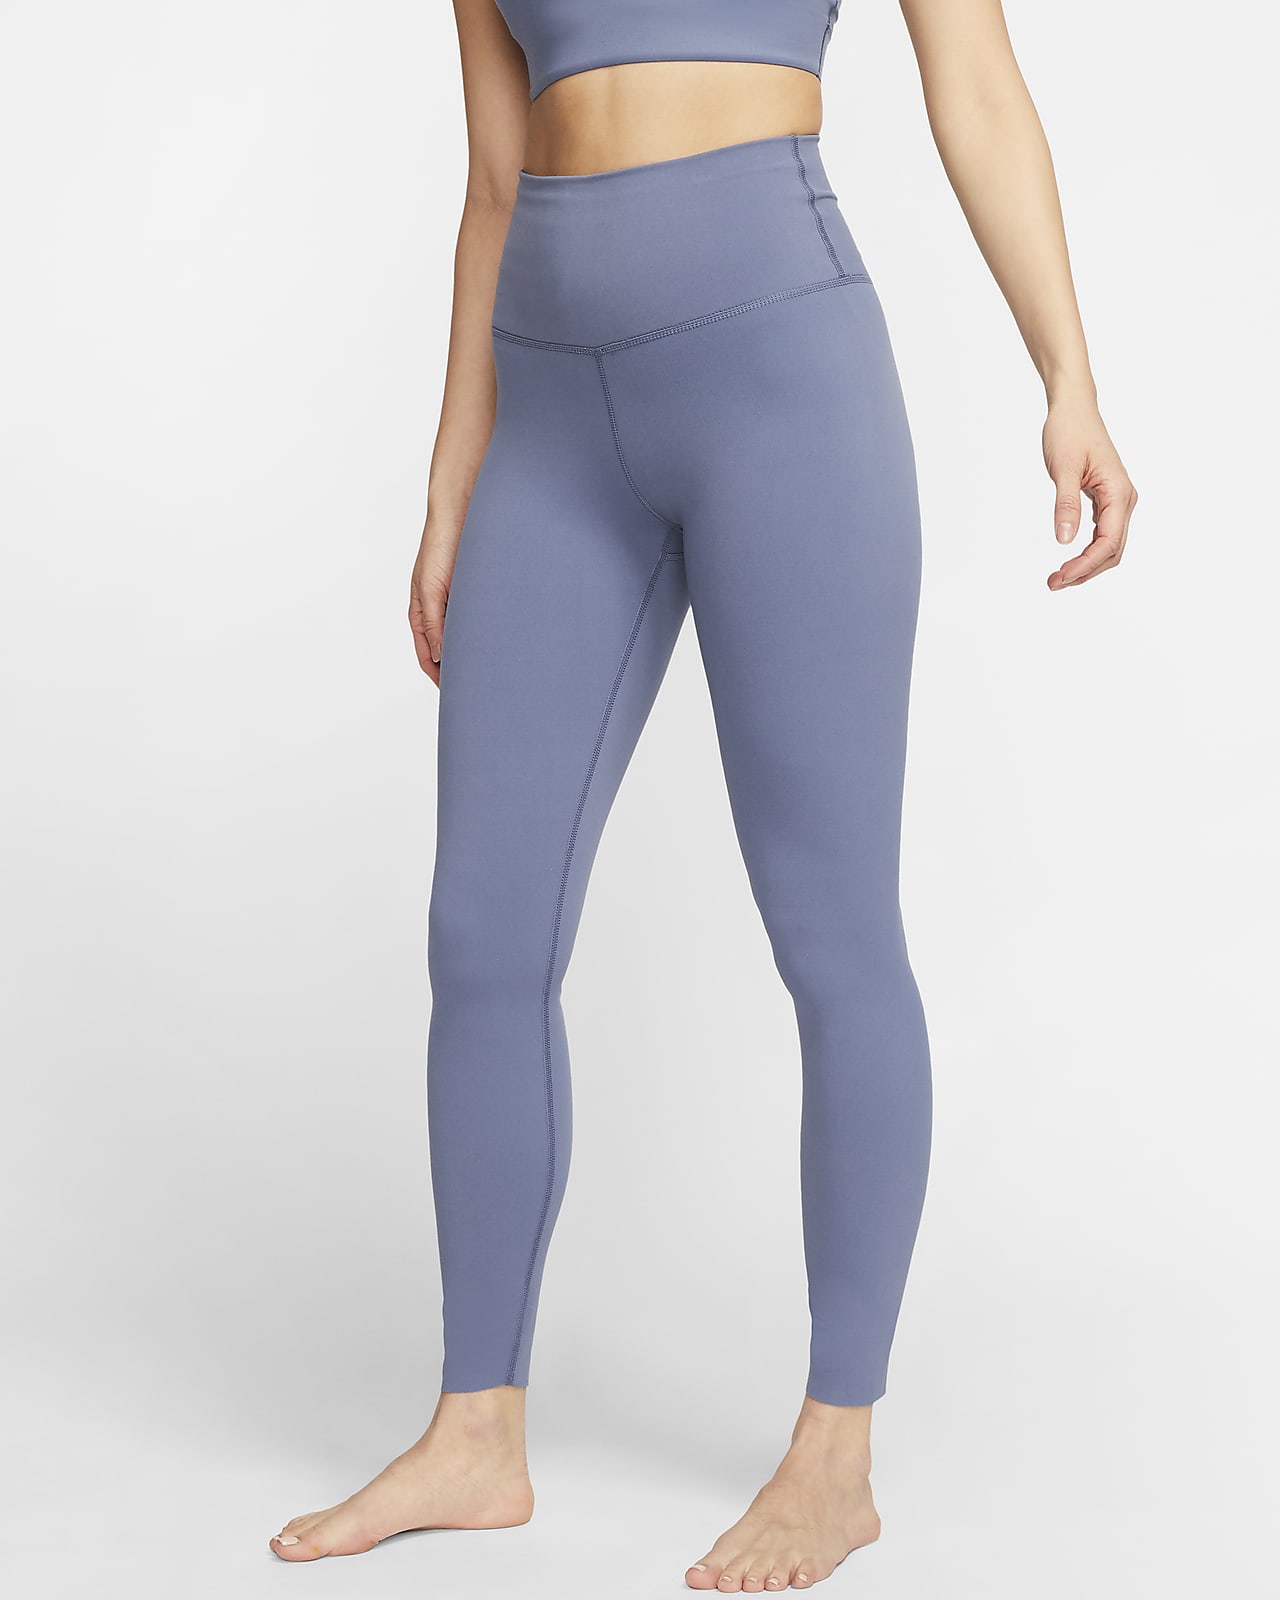 Mallas de 7/8 para mujer Infinalon Nike Yoga Luxe. Nike.com